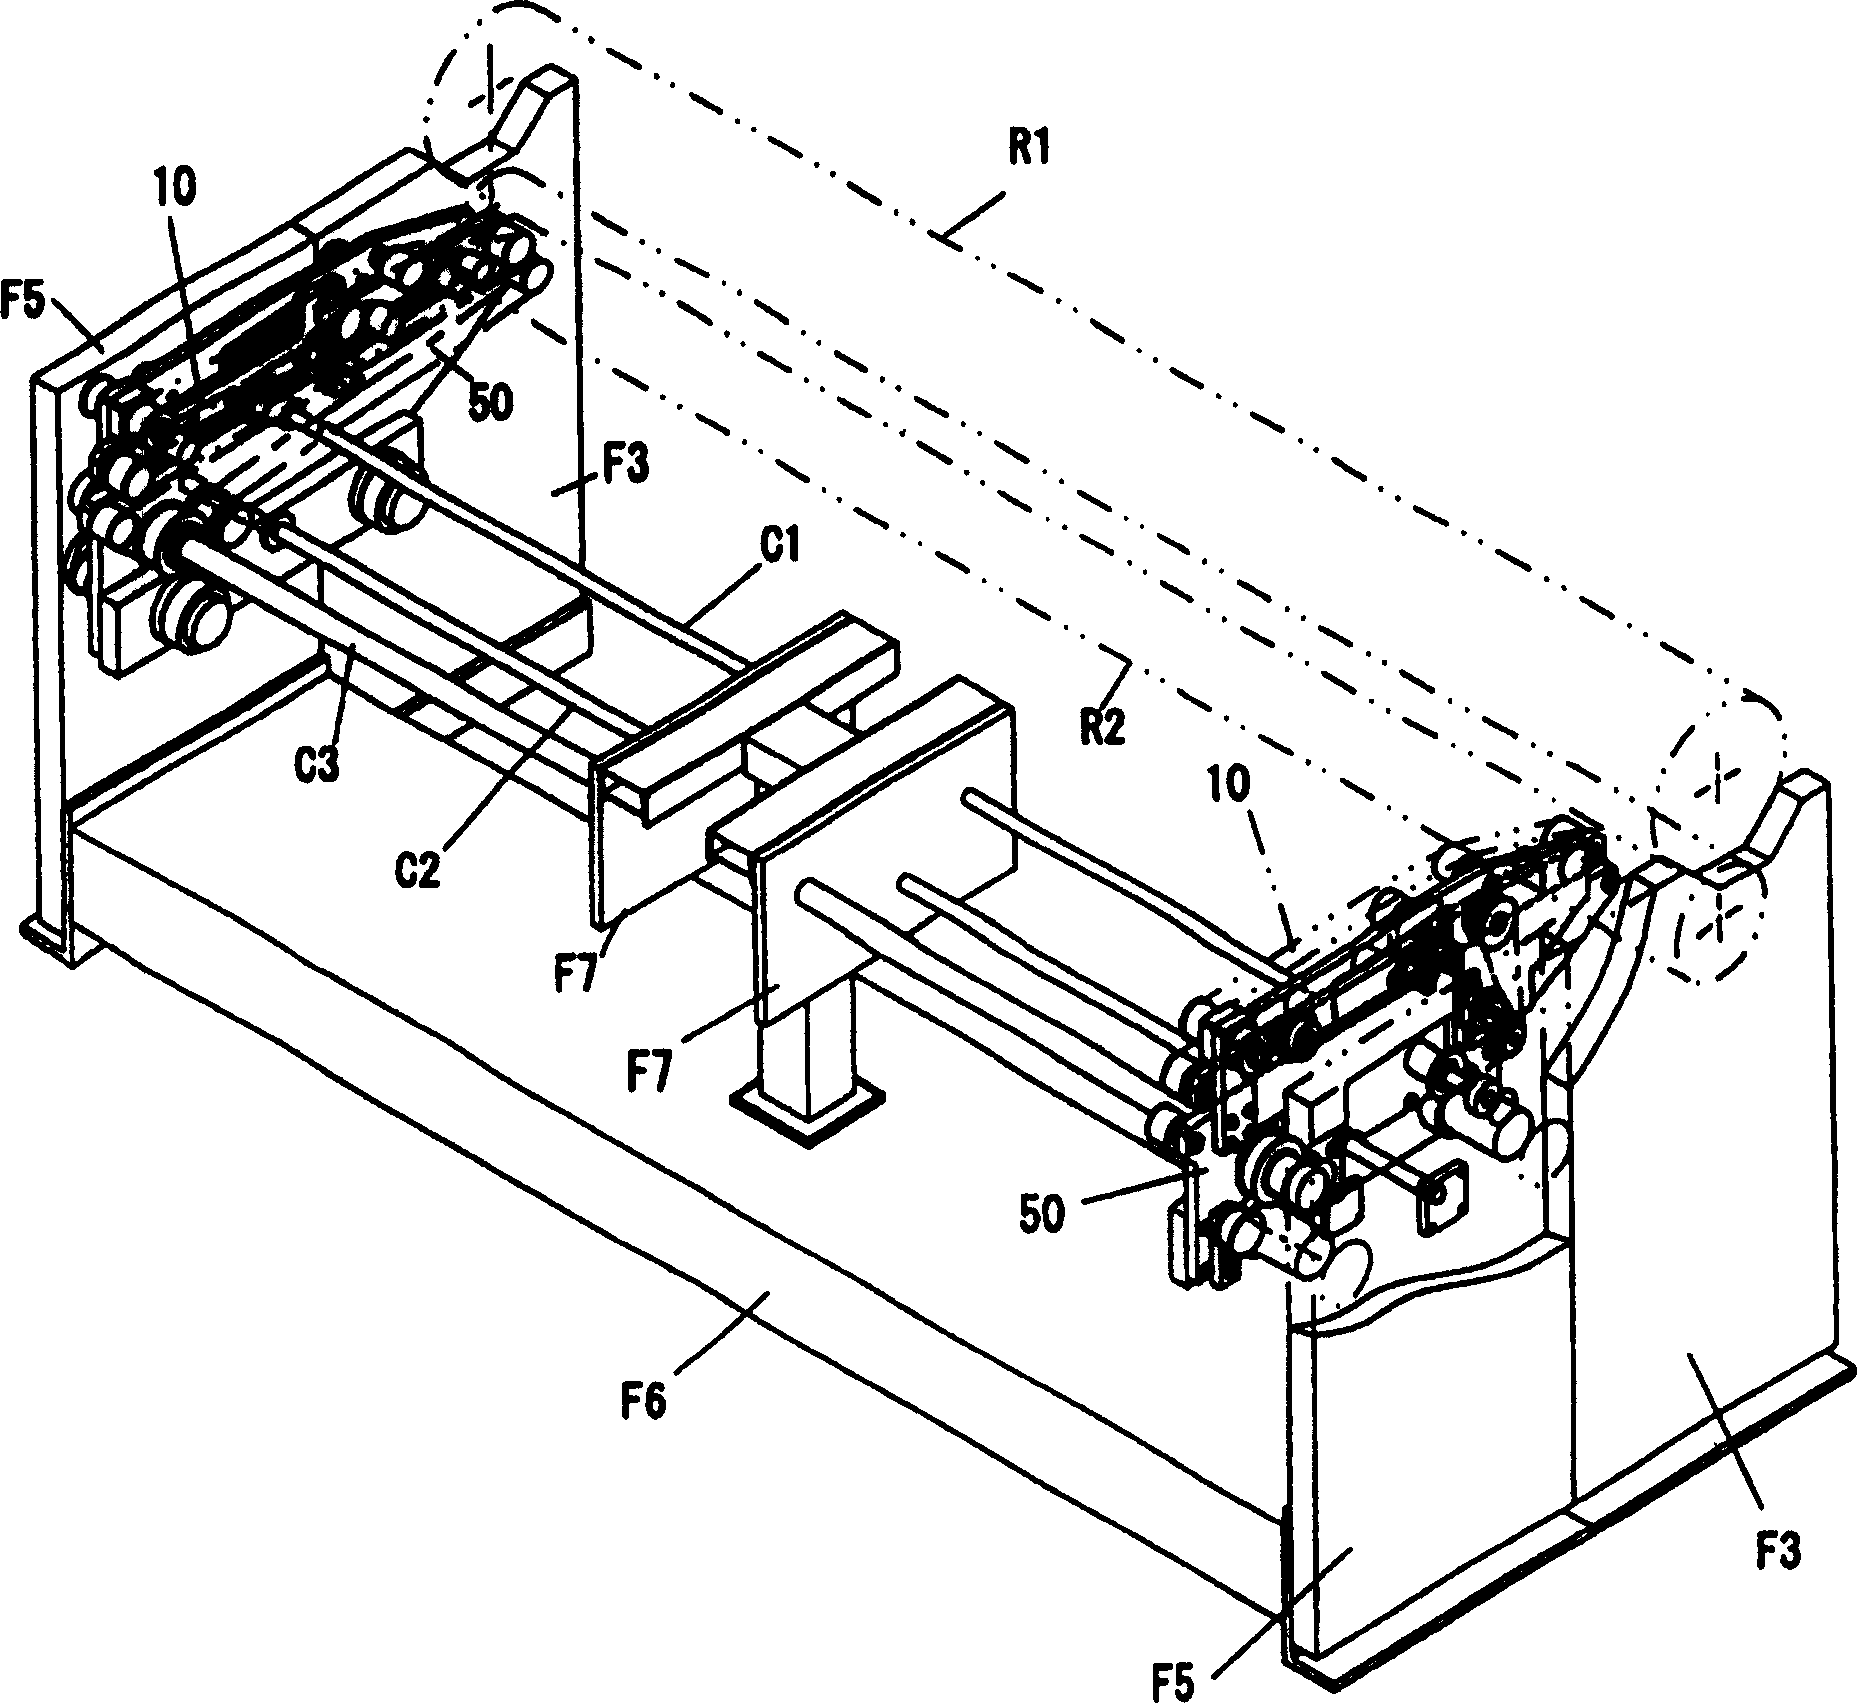 Skip conveyor device of sheet-fed piece printing part